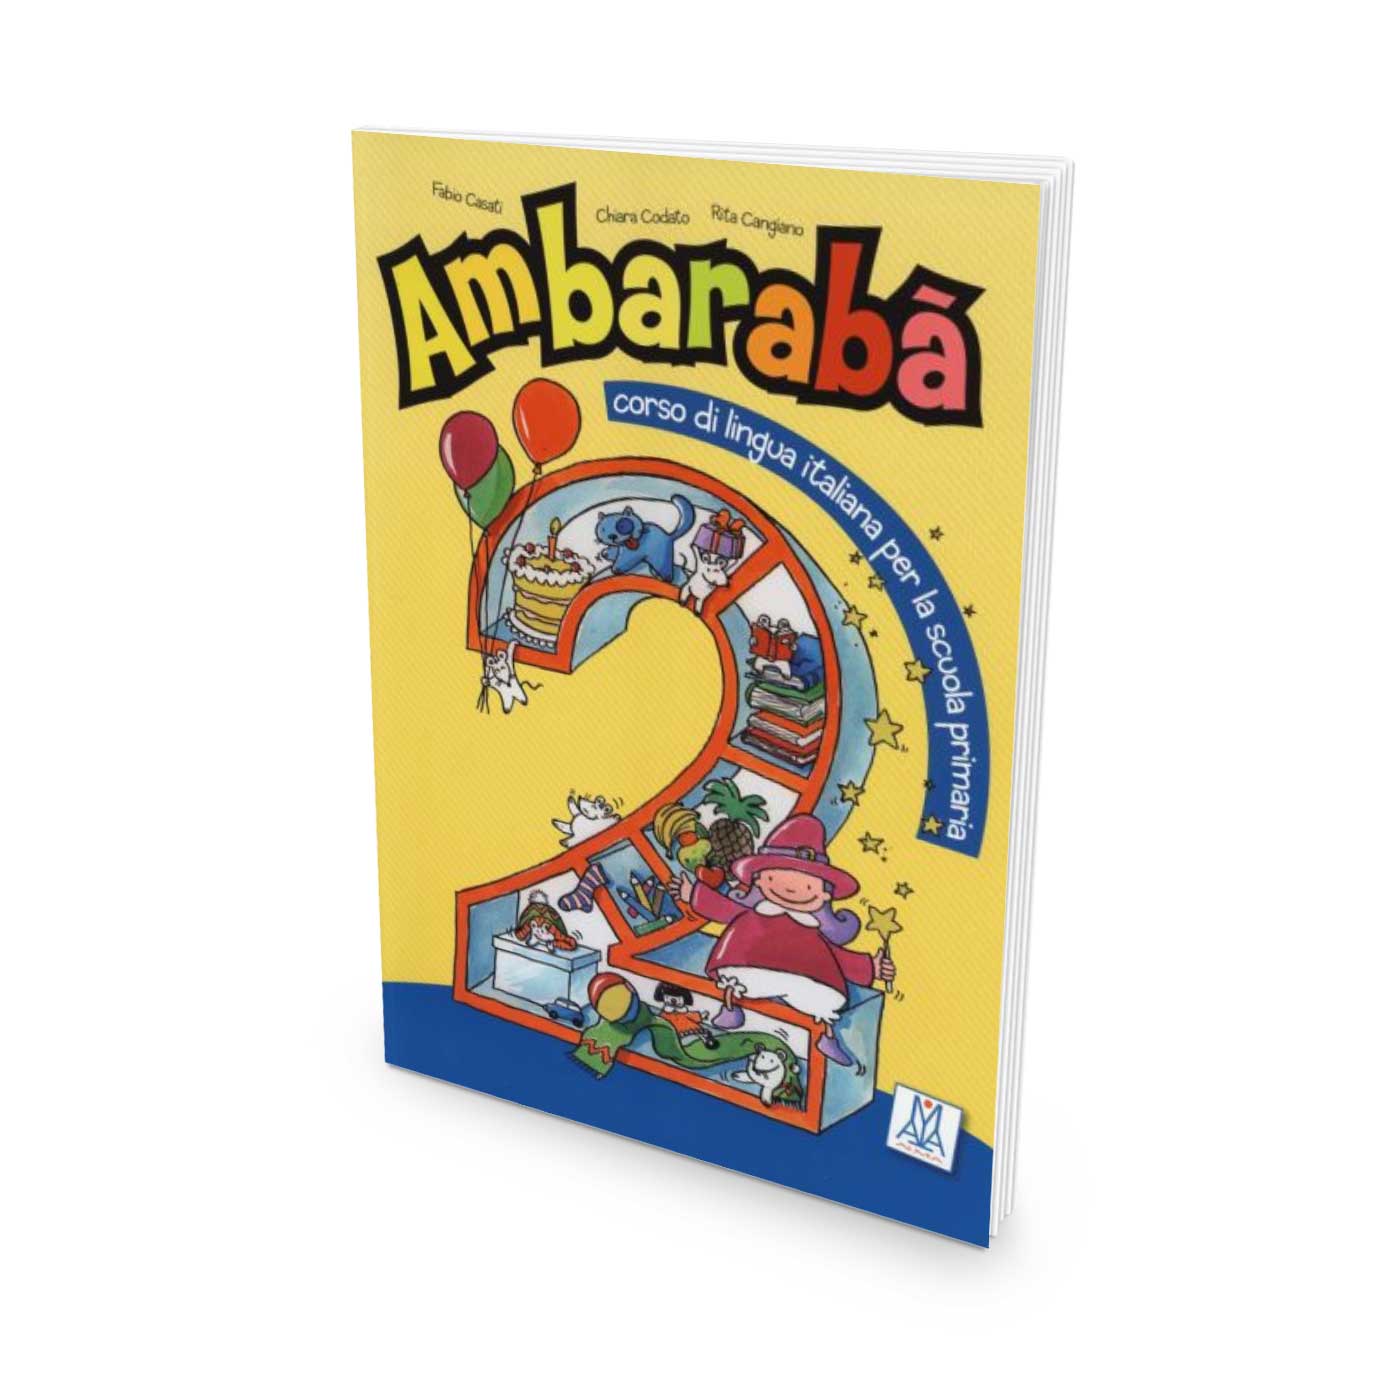 ALMA Edizioni – Ambarabà 2, course book